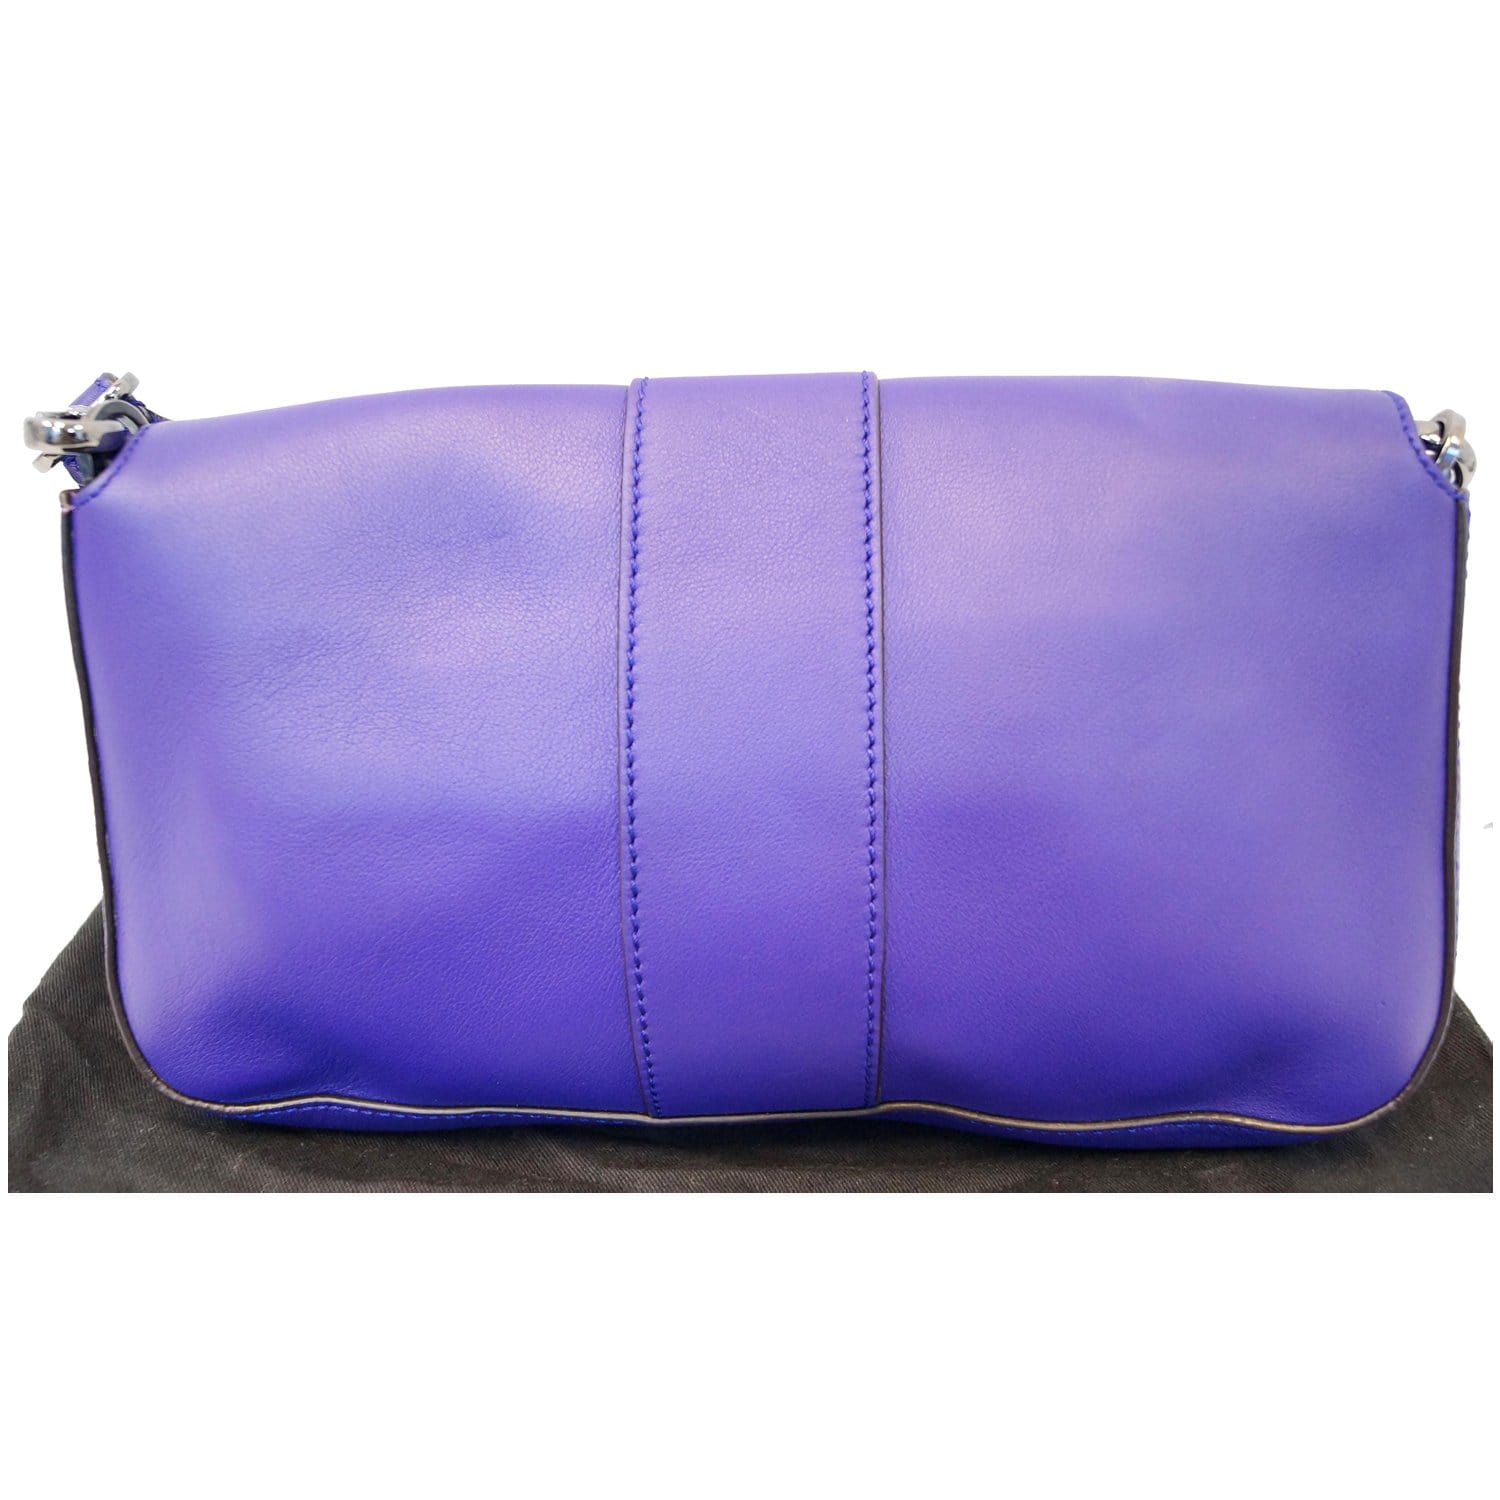 Baguette chain leather crossbody bag Fendi Purple in Leather